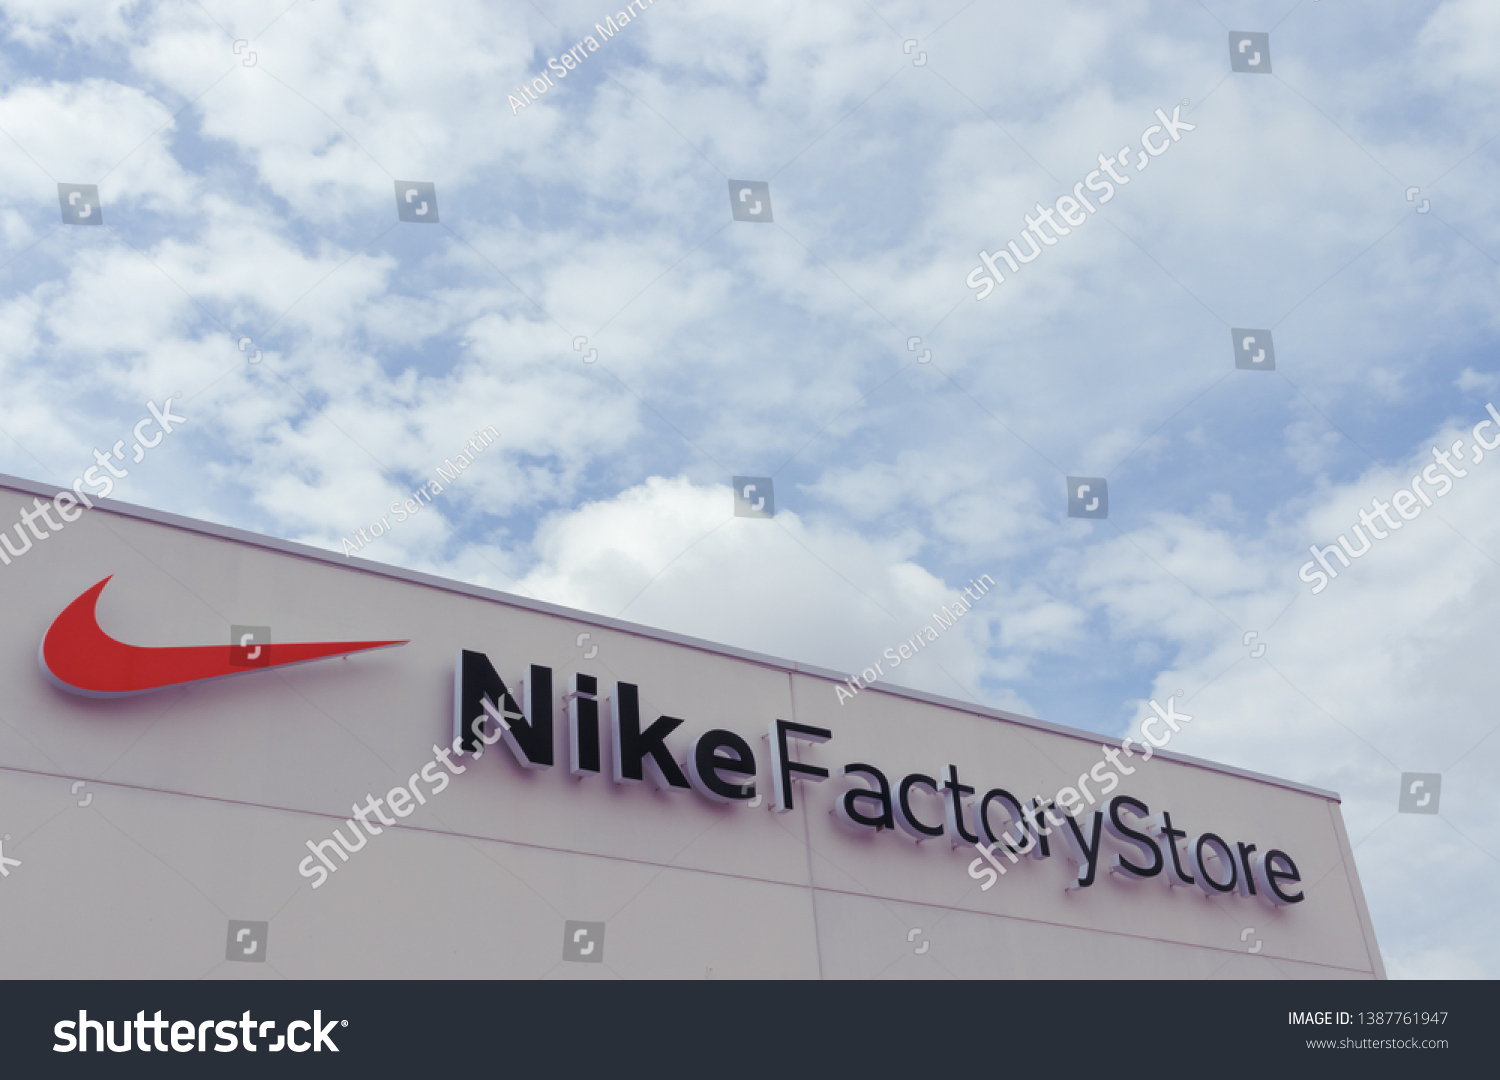 Misionero el propósito himno Nacional May 2019 Castellon Spain Nike Factory Foto de stock 1387761947 |  Shutterstock